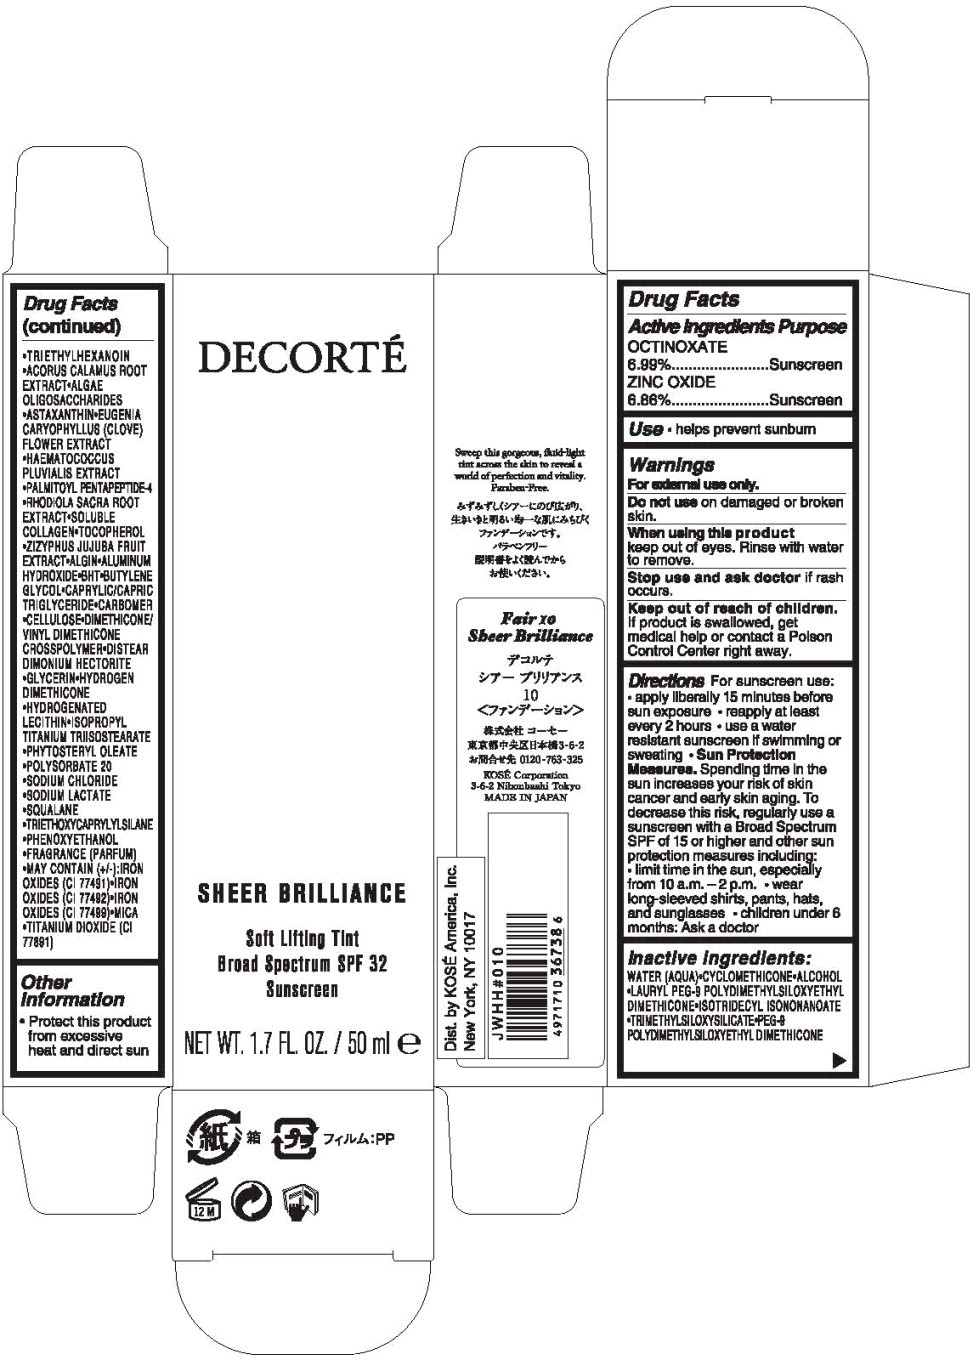 Principal Display Panel - Decorte Sheet Brilliance 10 Level 50 ml Carton Label
